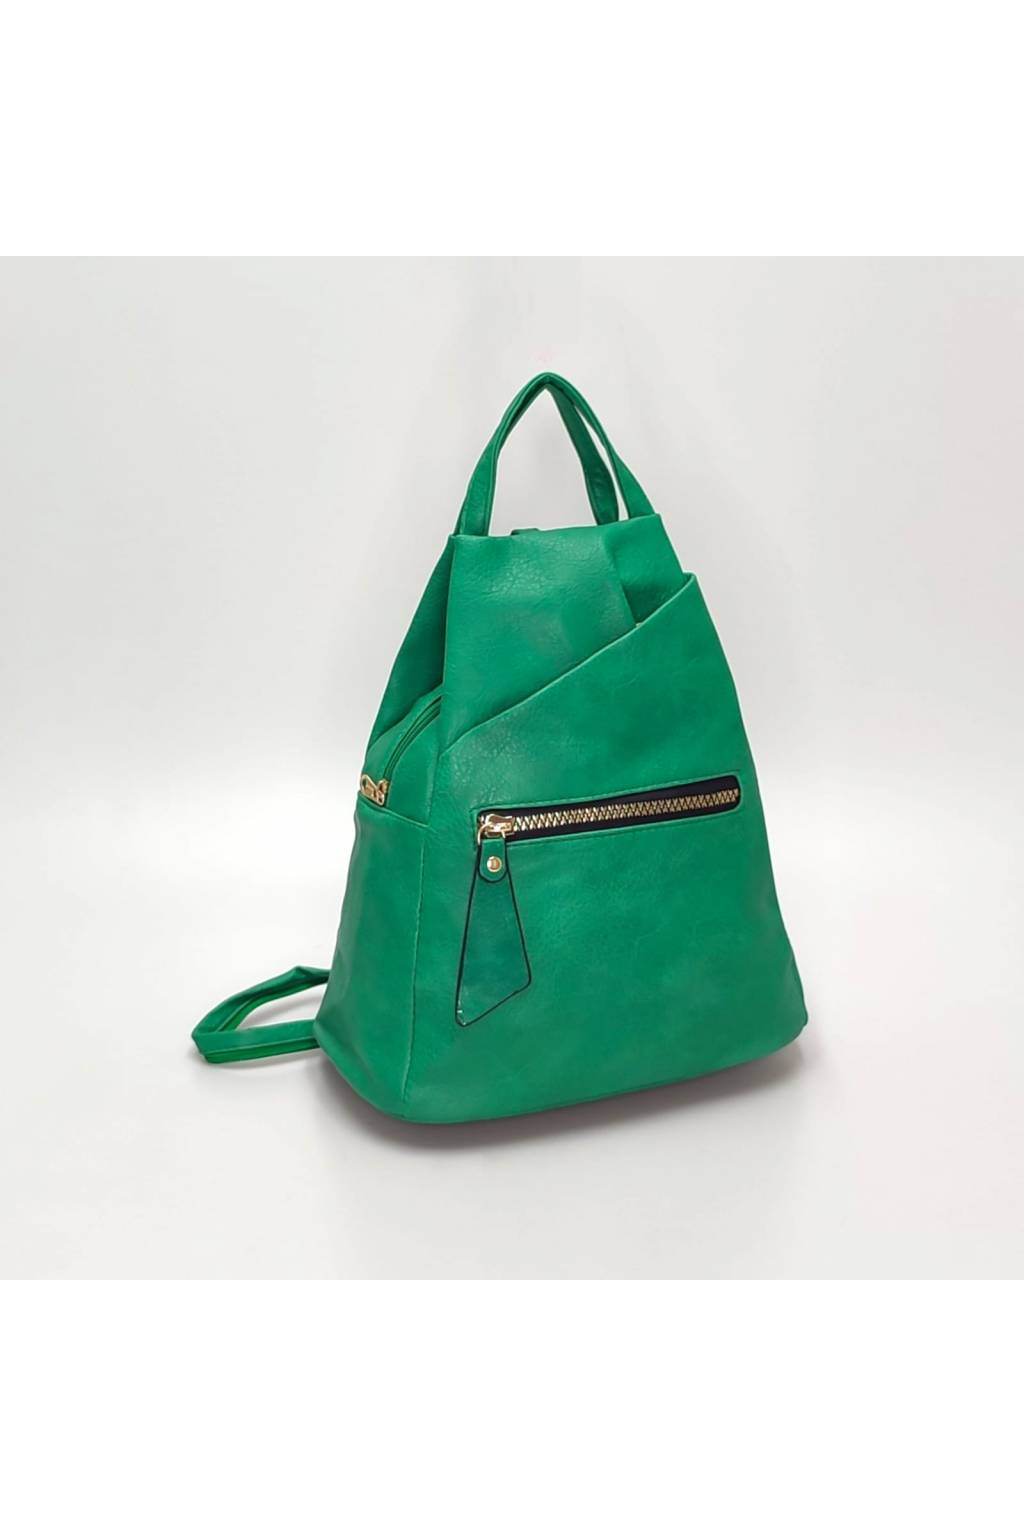 Dámsky ruksak 6873 zelený www.kabelky vypredaj (34)